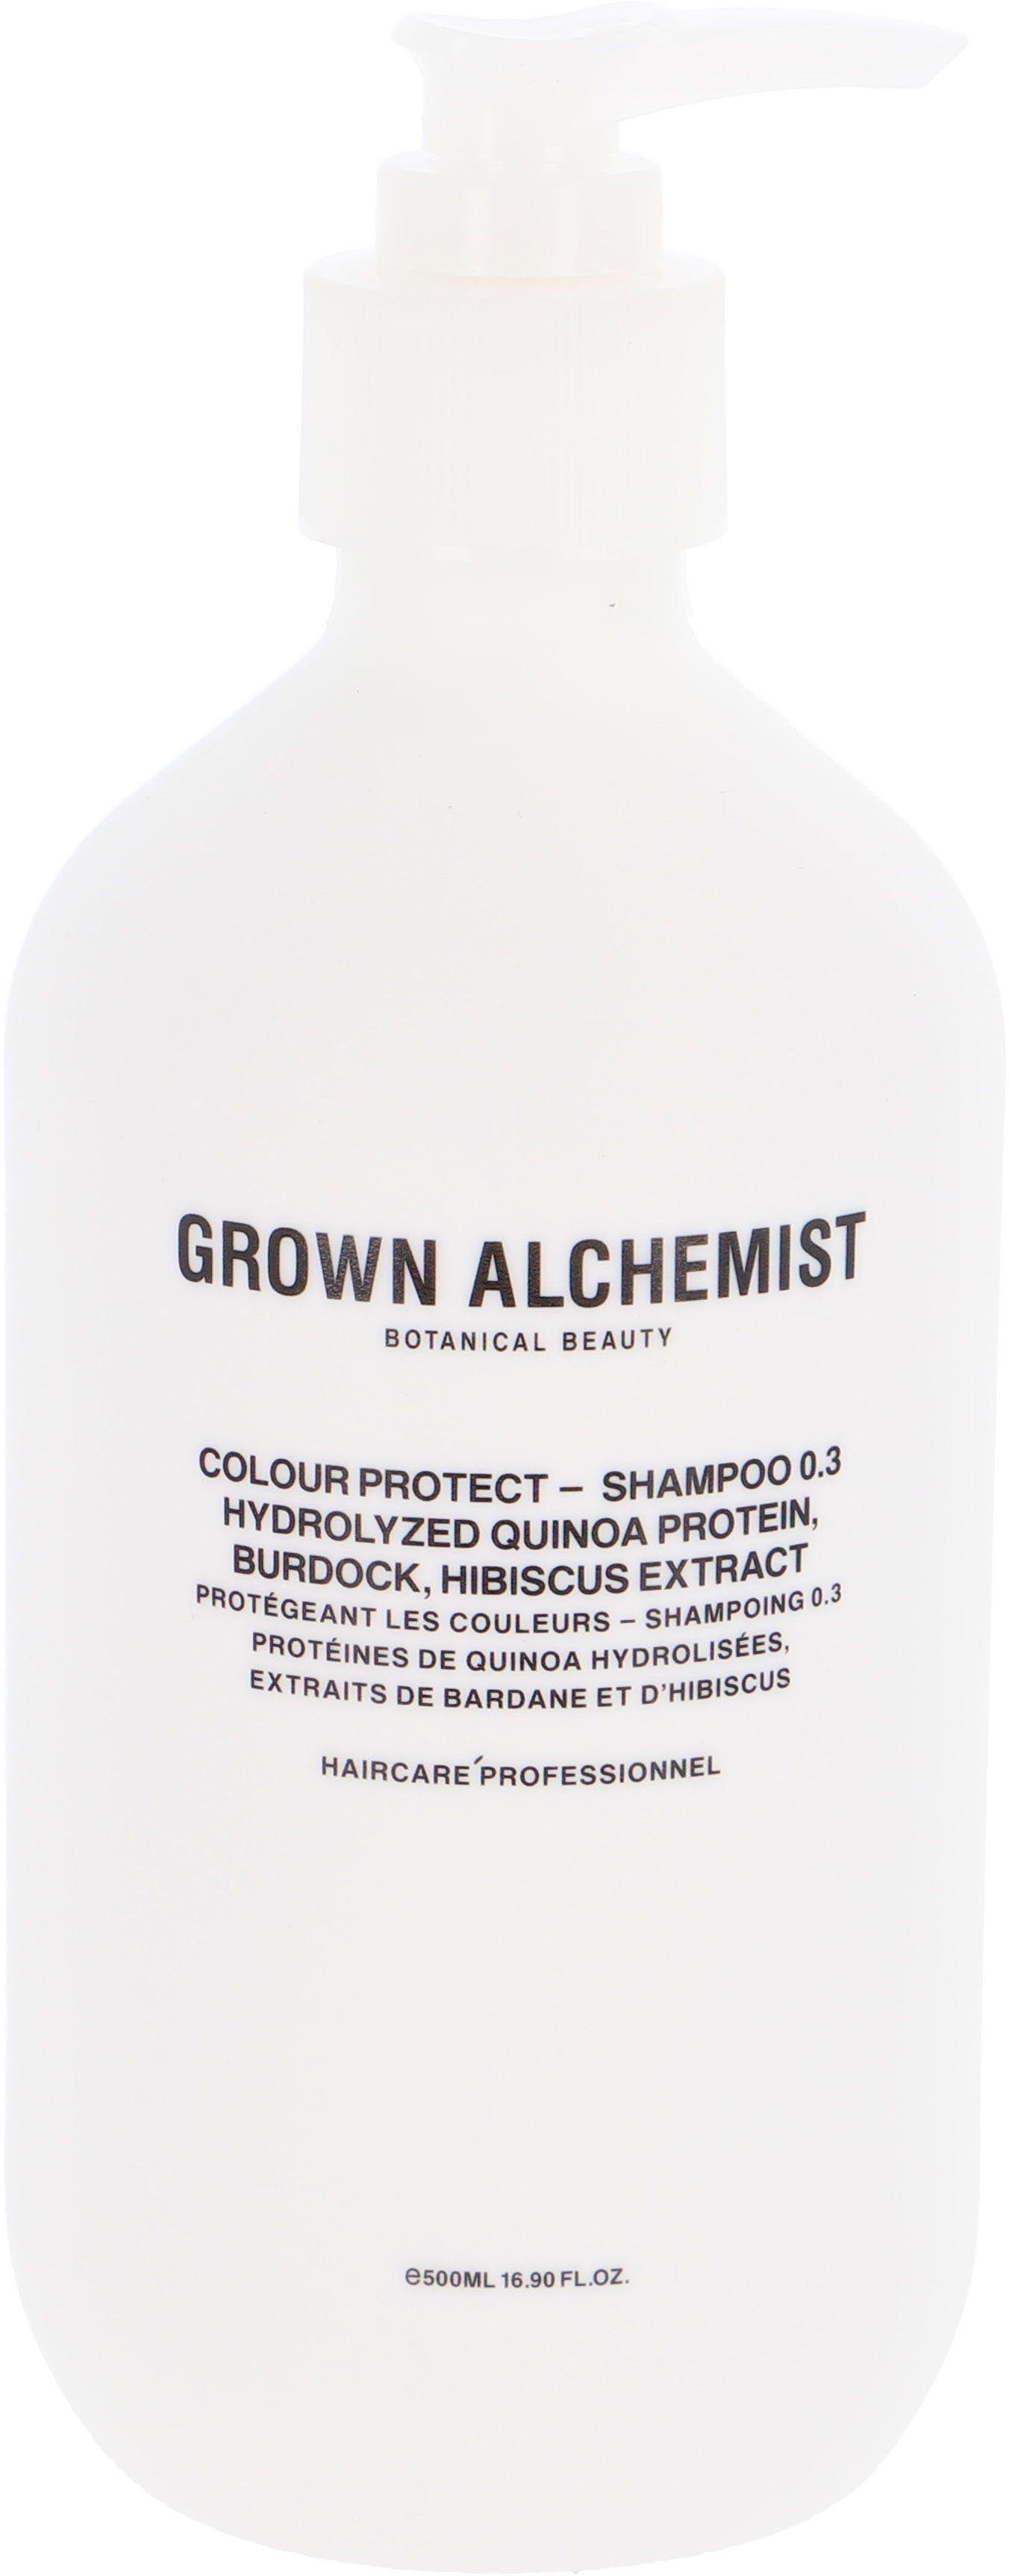 Protect Colour Hydrolyzed Shampoo Burdock, Hibiscus ALCHEMIST Haarshampoo GROWN 0.3, - Protein, Extract Quinoa